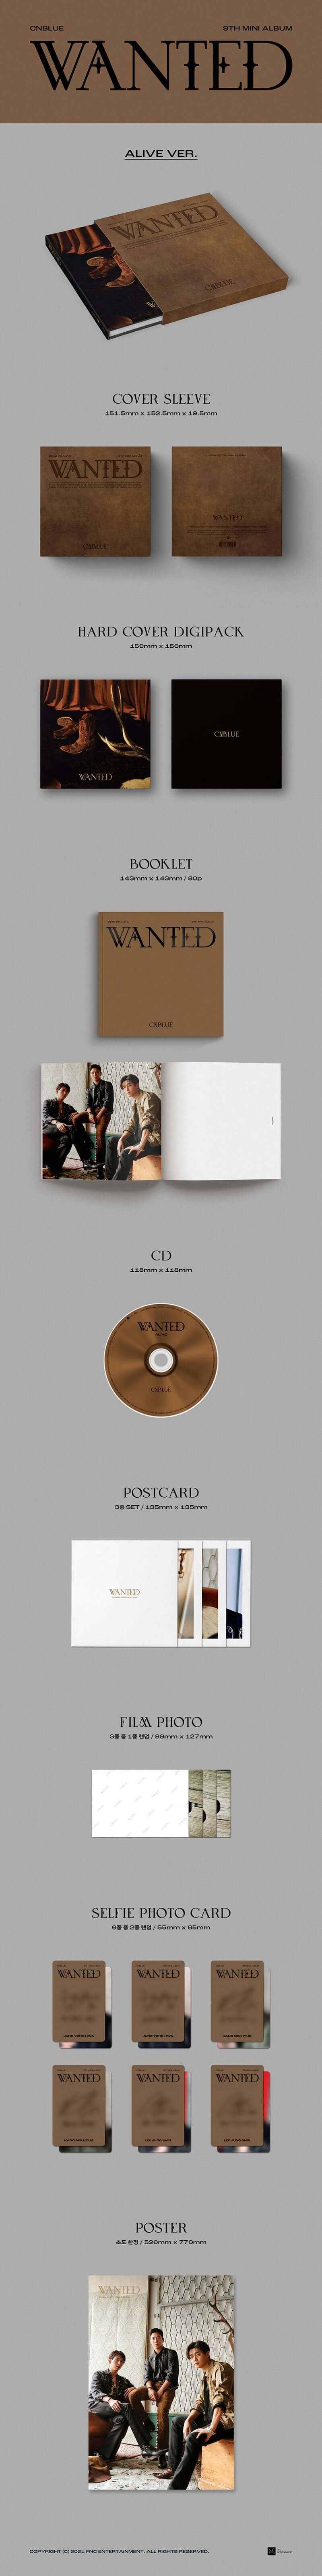 CNBLUE - مطلوب (ألبوم صغير التاسع)